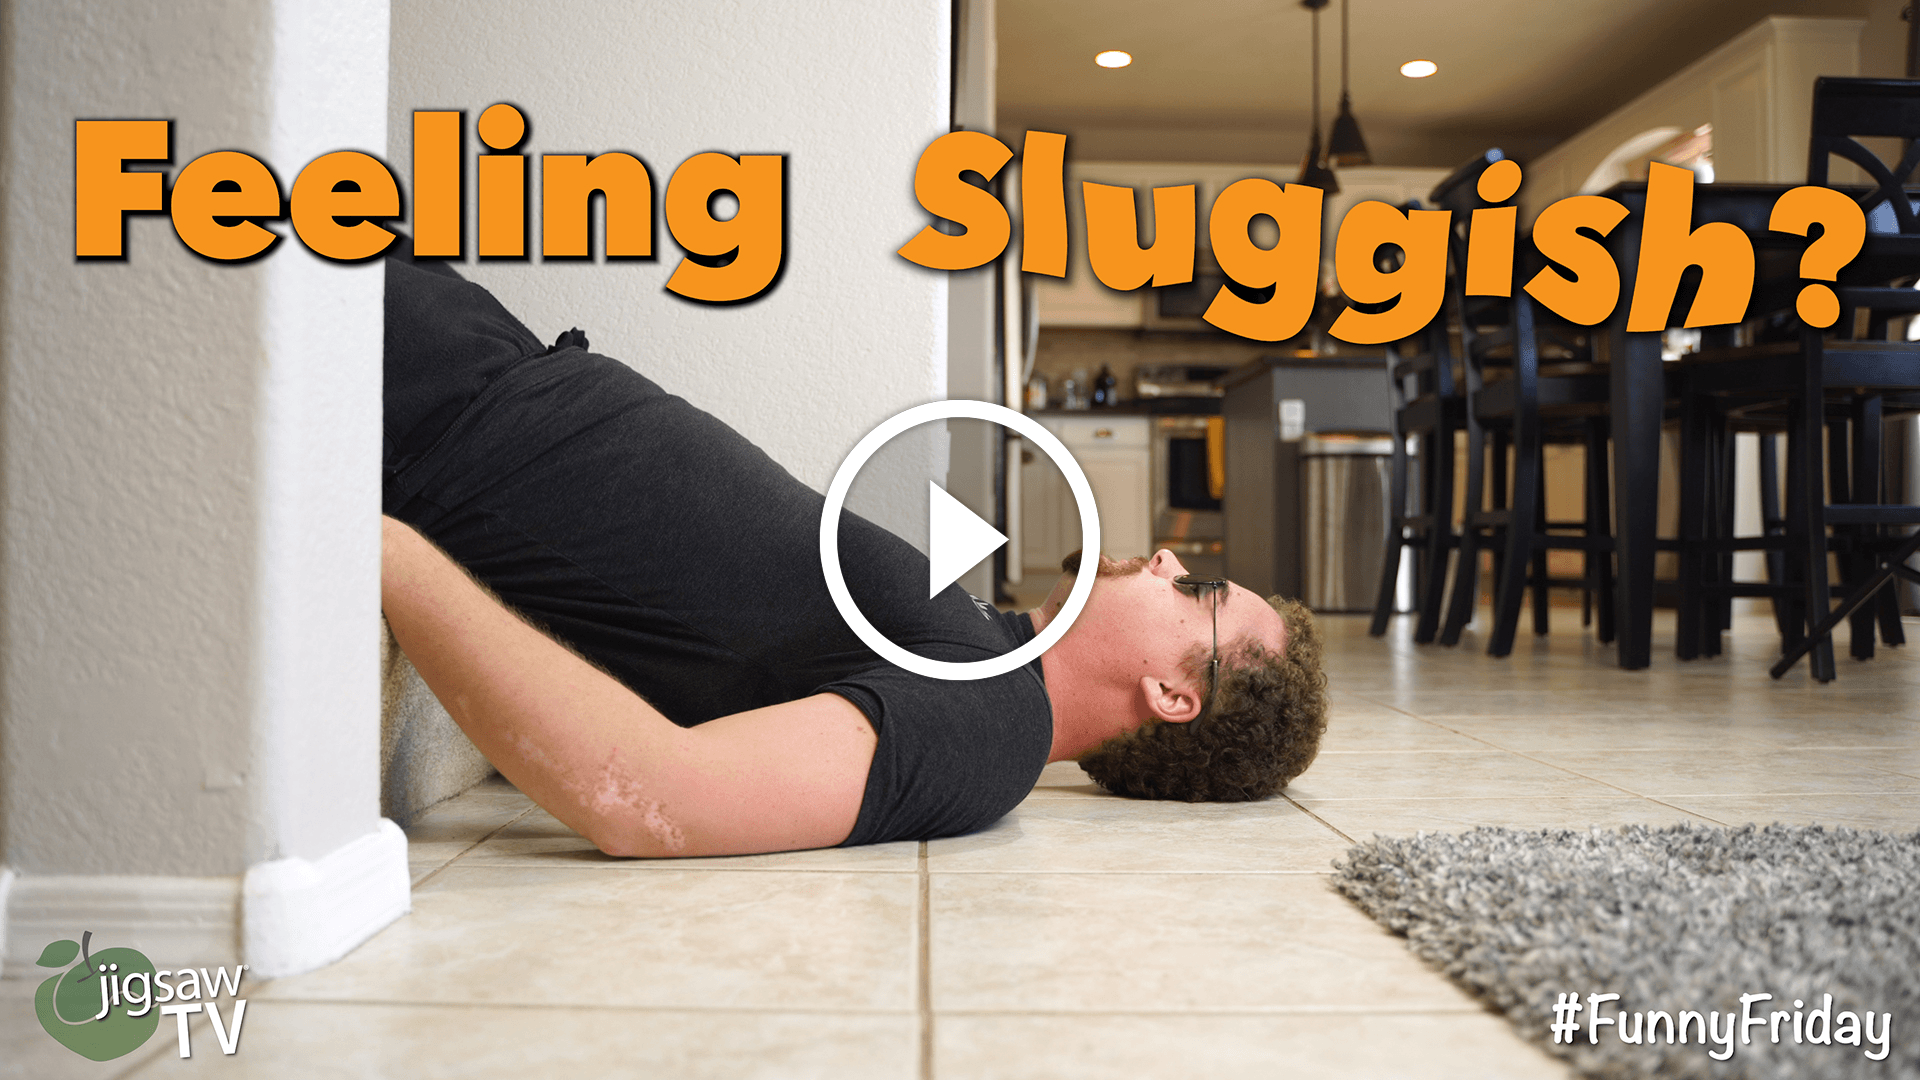 Feeling Sluggish at Home? | #FunnyFriday